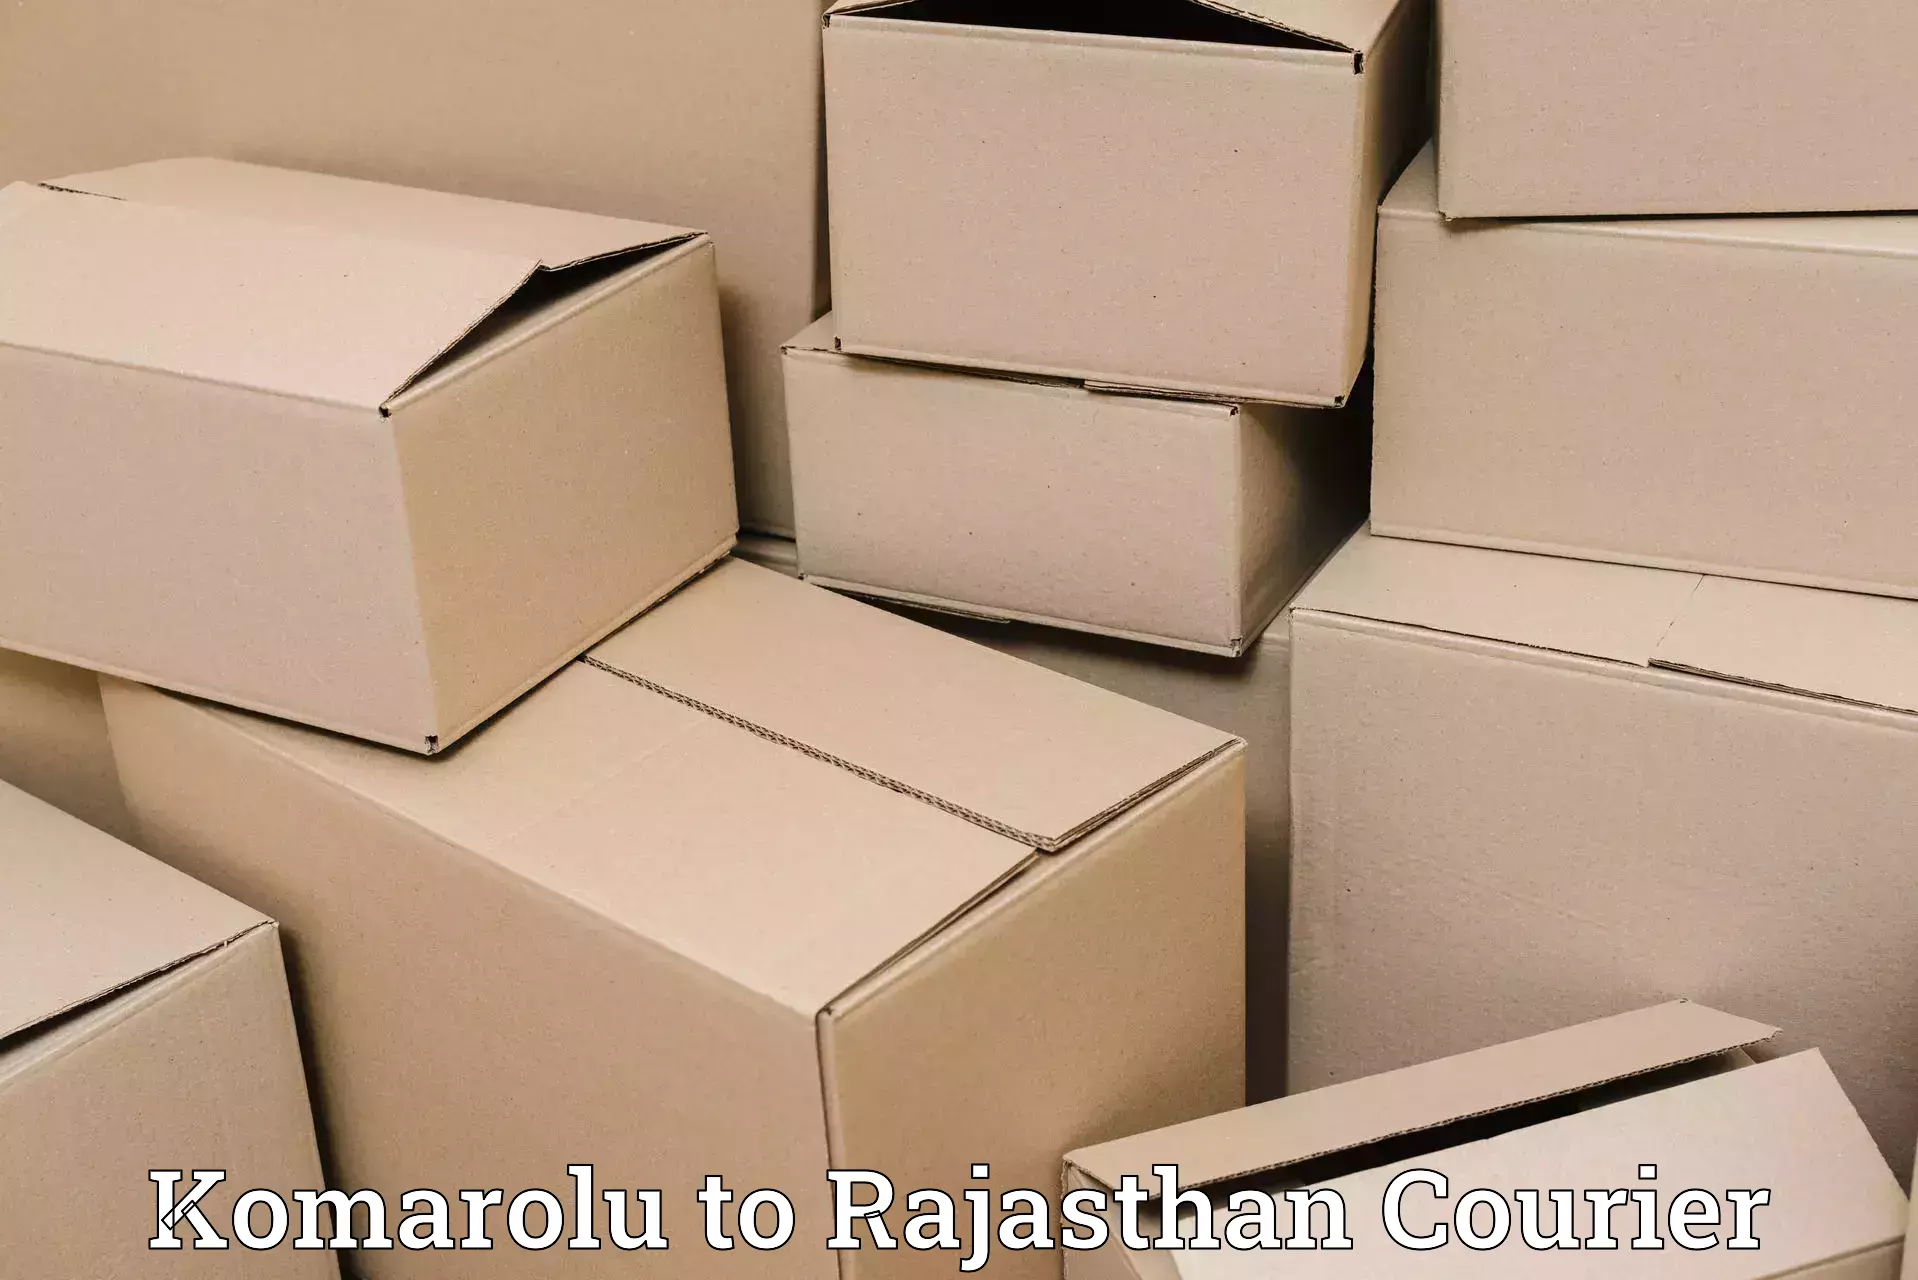 Global courier networks Komarolu to Rajasthan